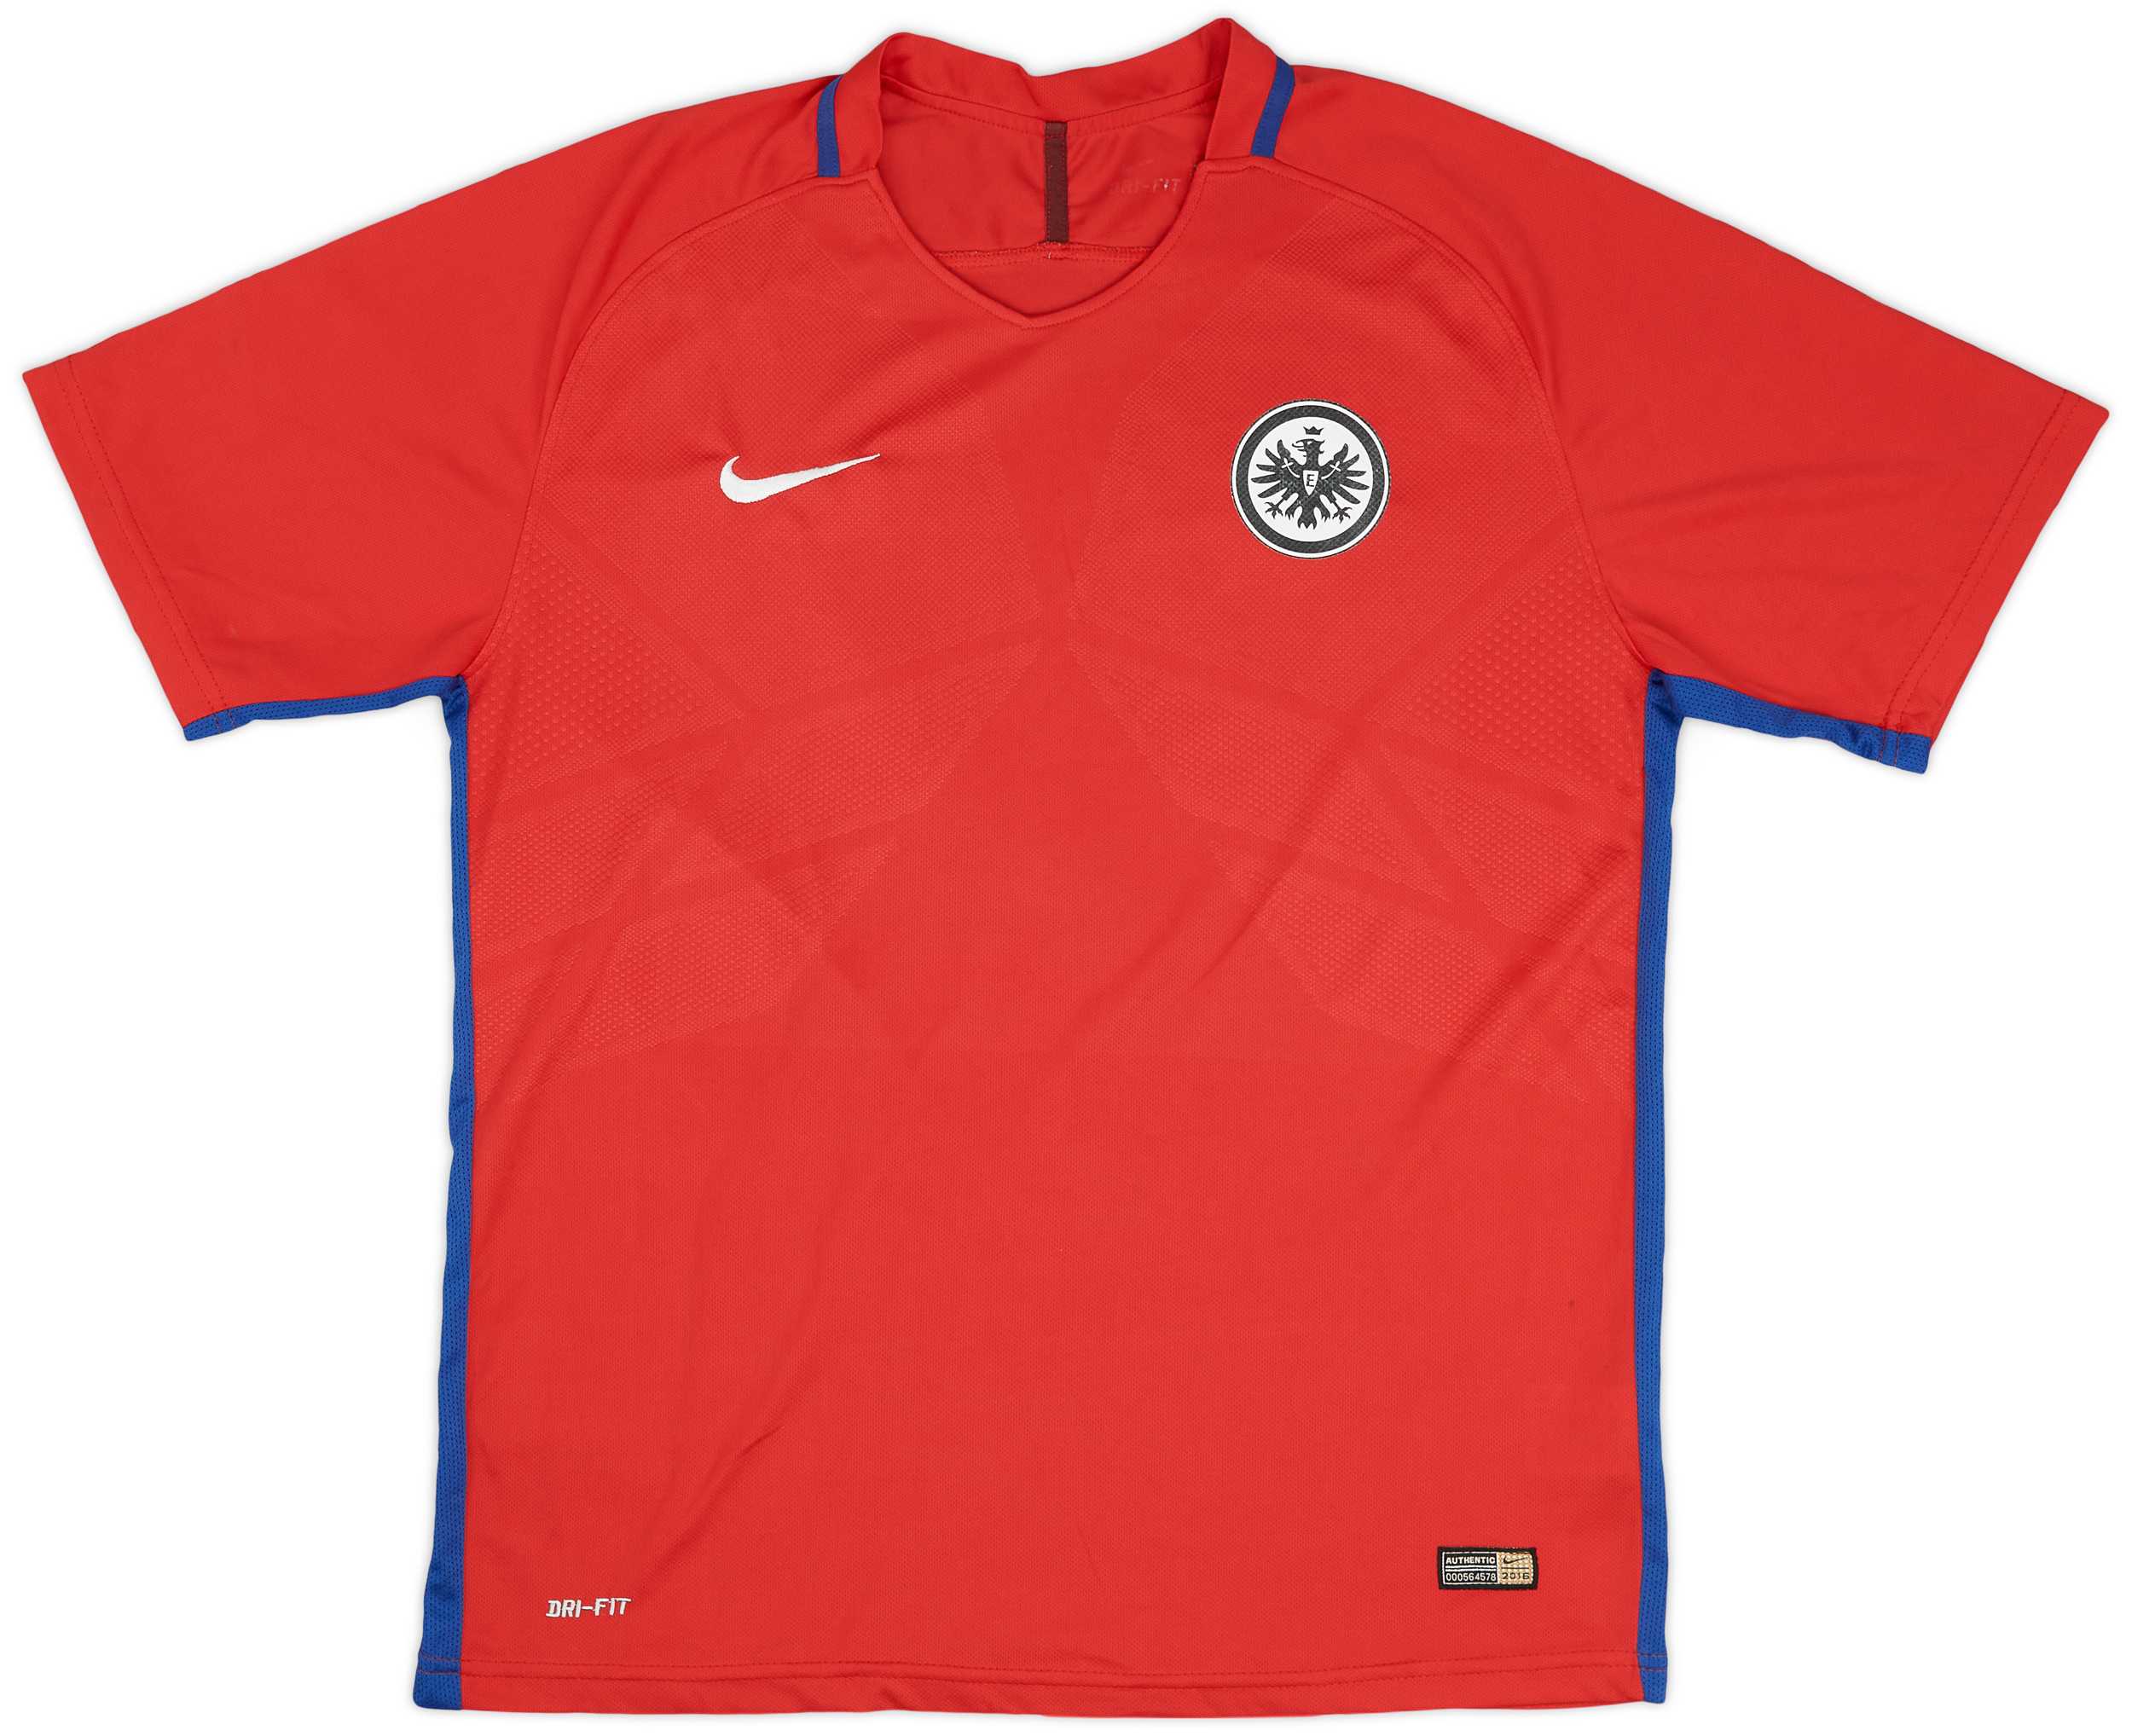 Eintracht Frankfurt  Uit  shirt  (Original)